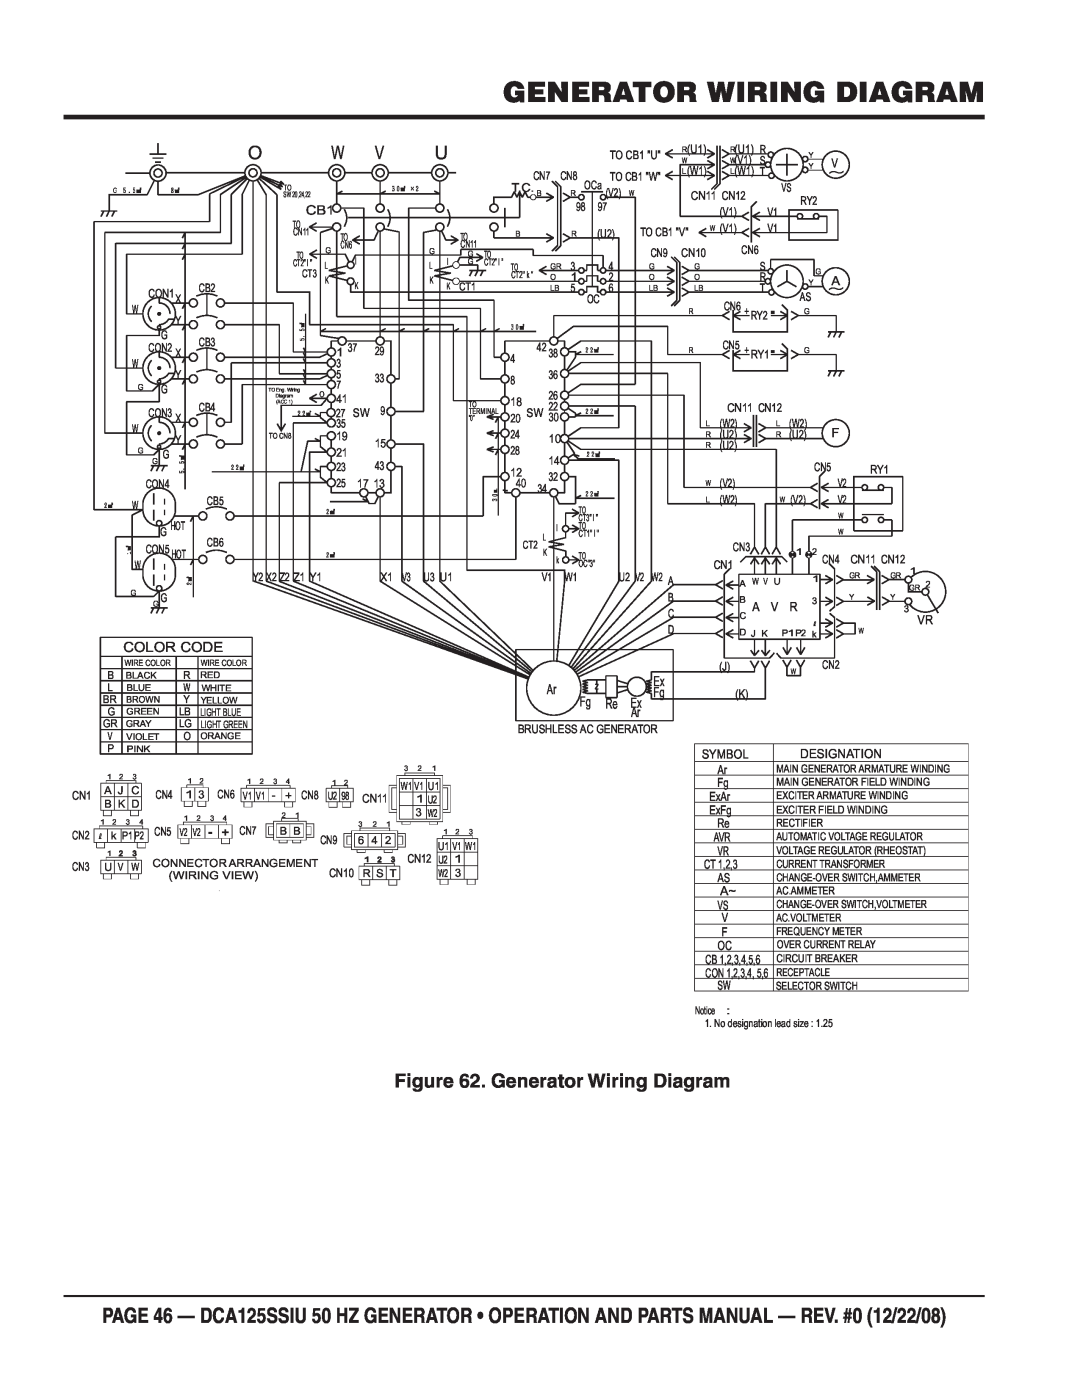 Multiquip DCA125SSIU manual Generator Wiring Diagram, Color Code, Symbol 